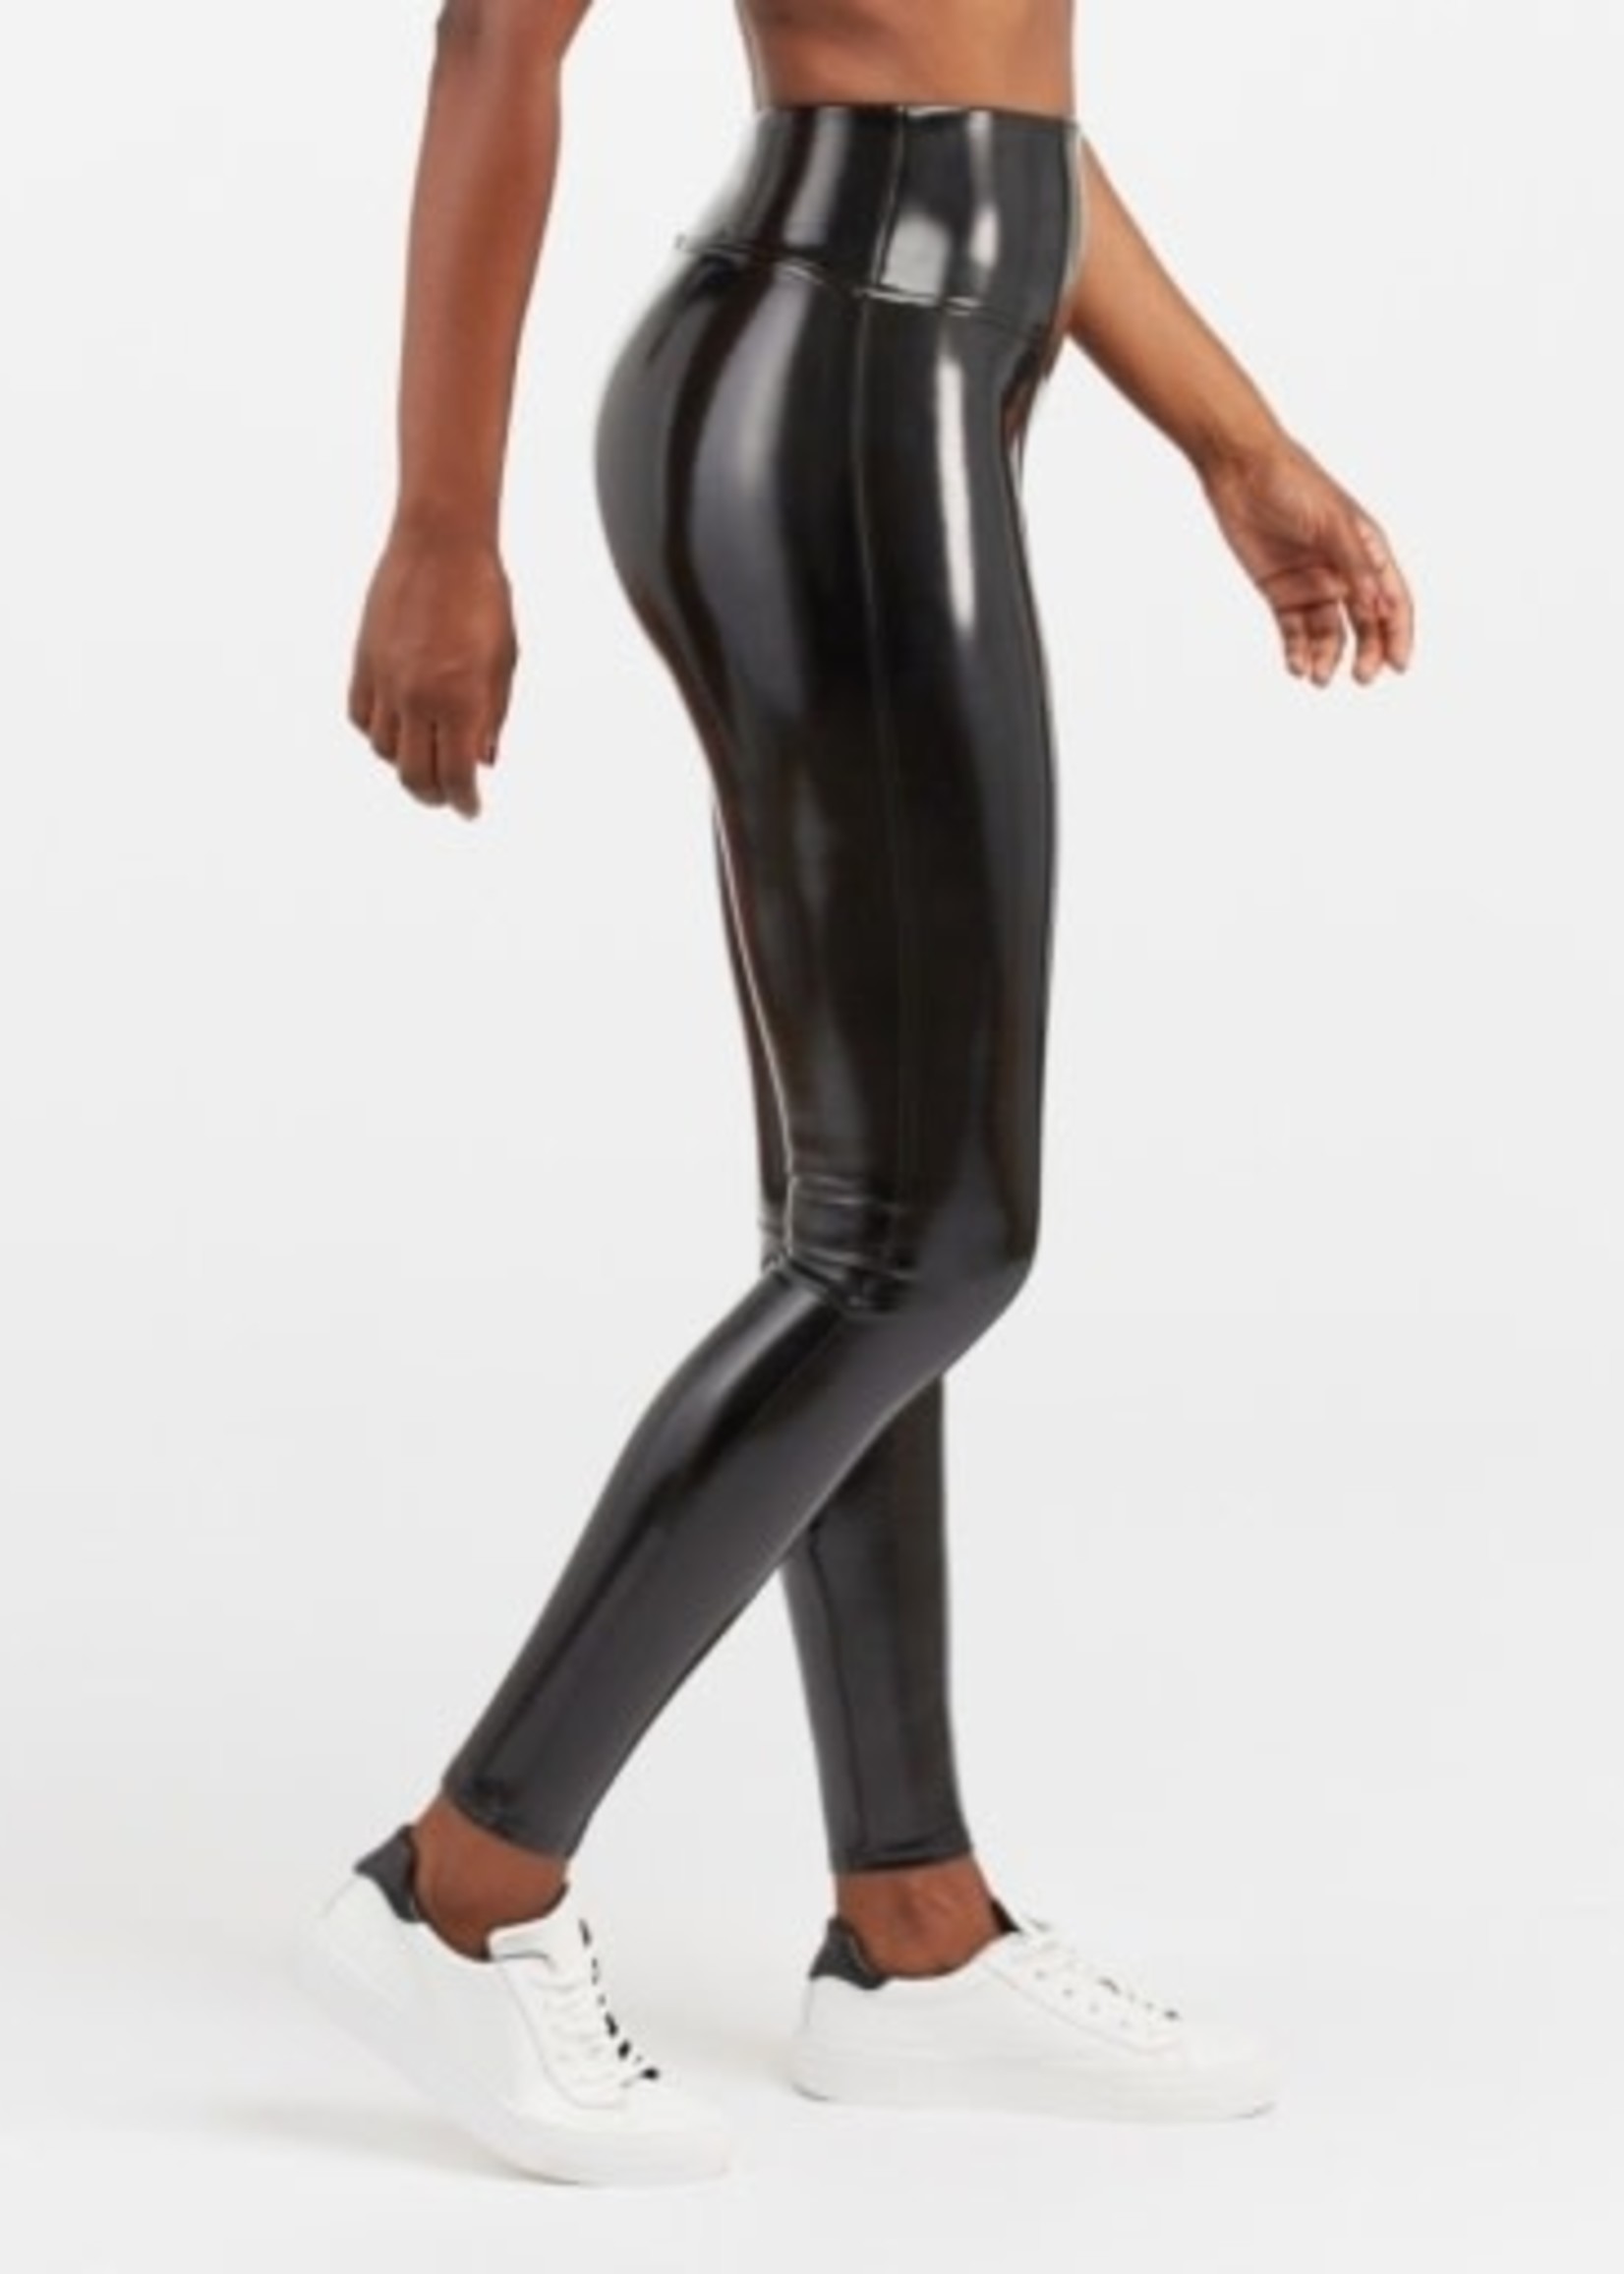 https://cdn.shoplightspeed.com/shops/640108/files/54547463/1652x2313x1/spanx-faux-patent-leather-leggings.jpg